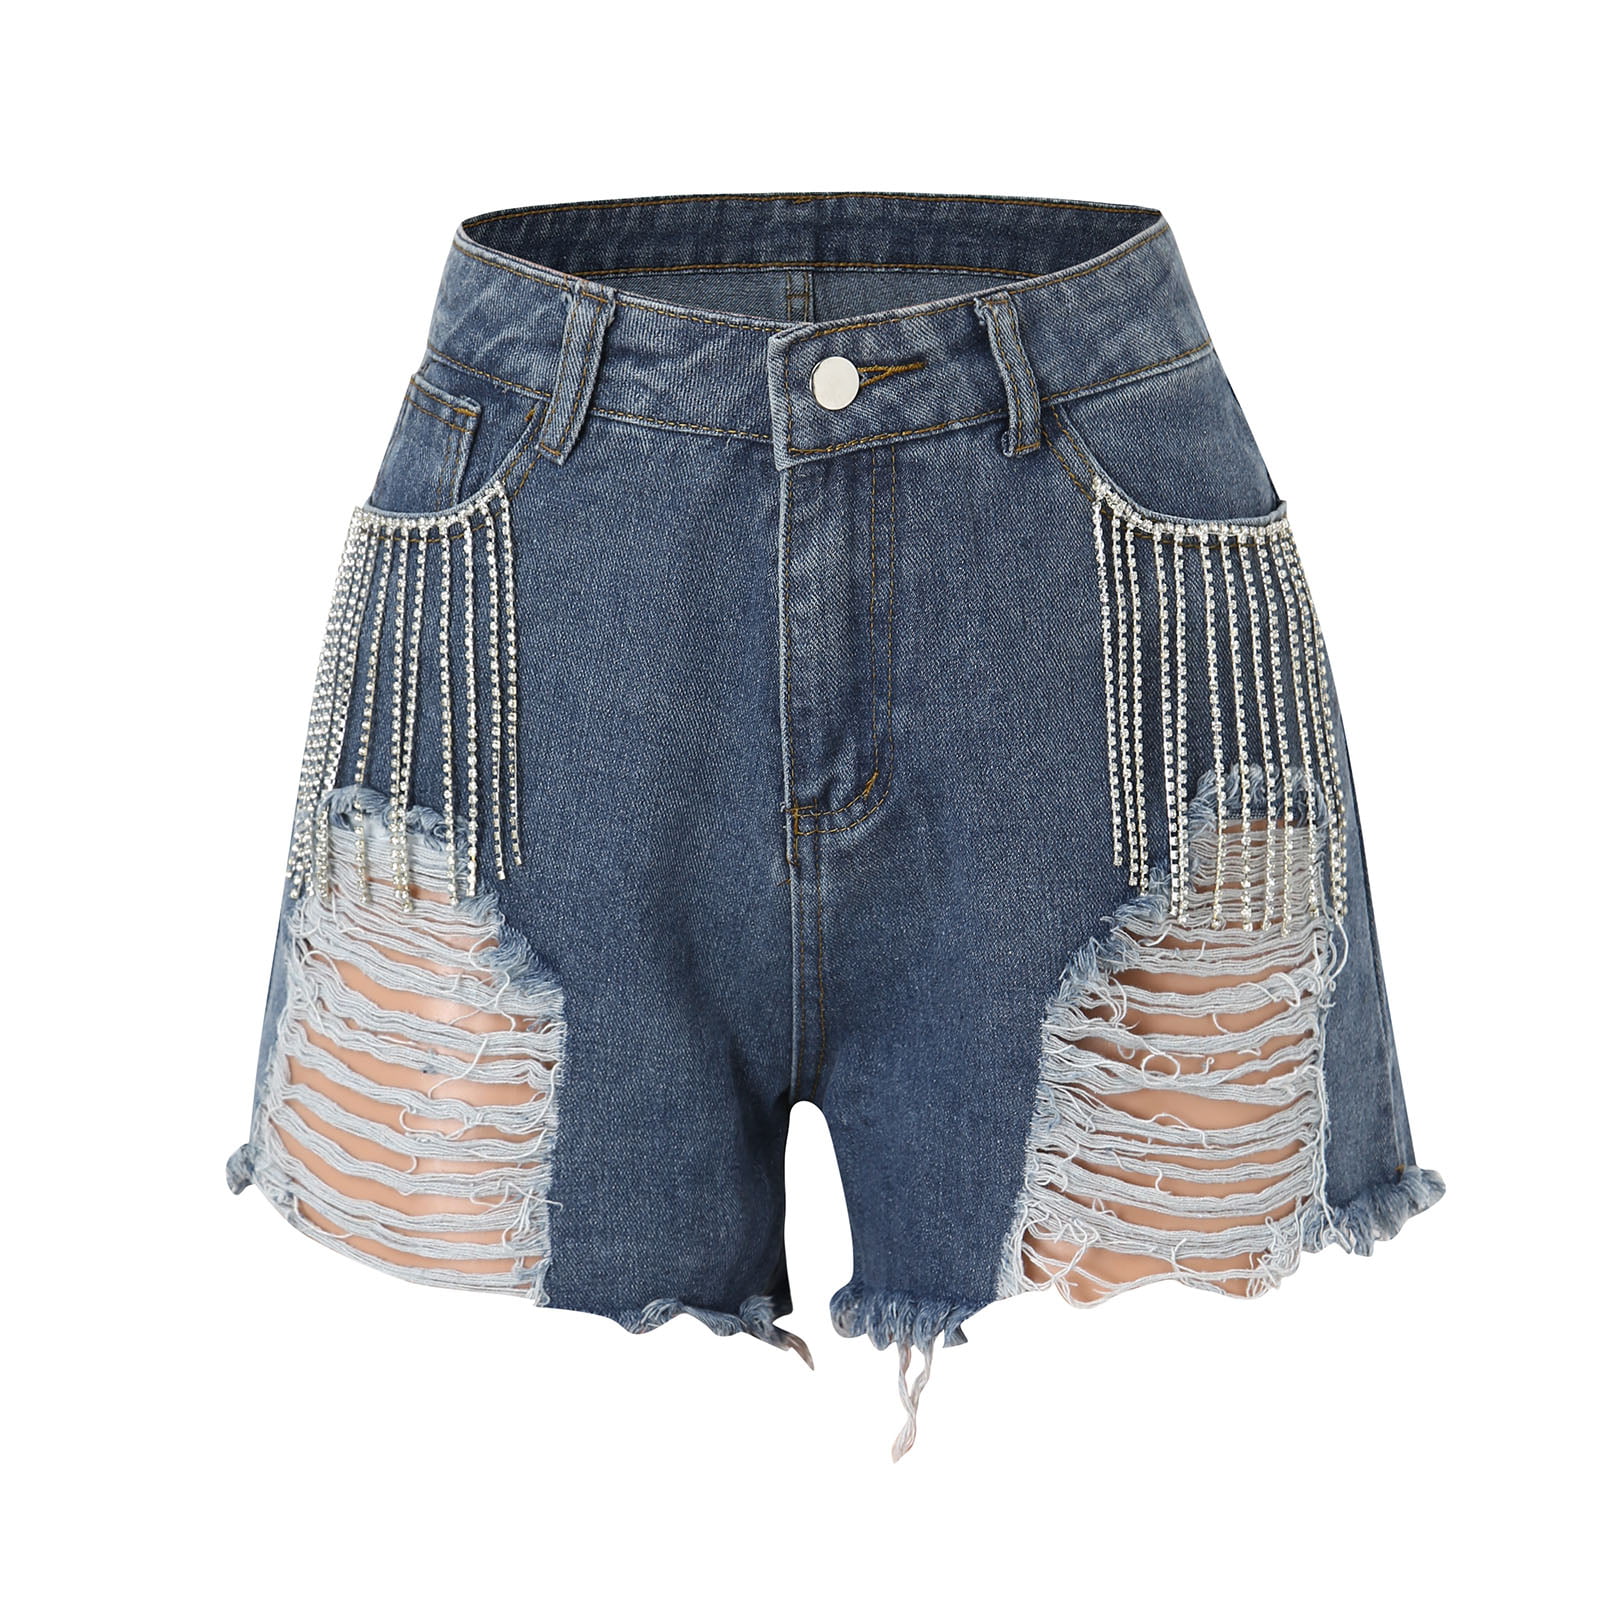 Cyparel Women's Rhinestone Denim Shorts Mid Waist Ripped Frayed Raw Hem Tessles Stretchy Jean Shorts with Pockets